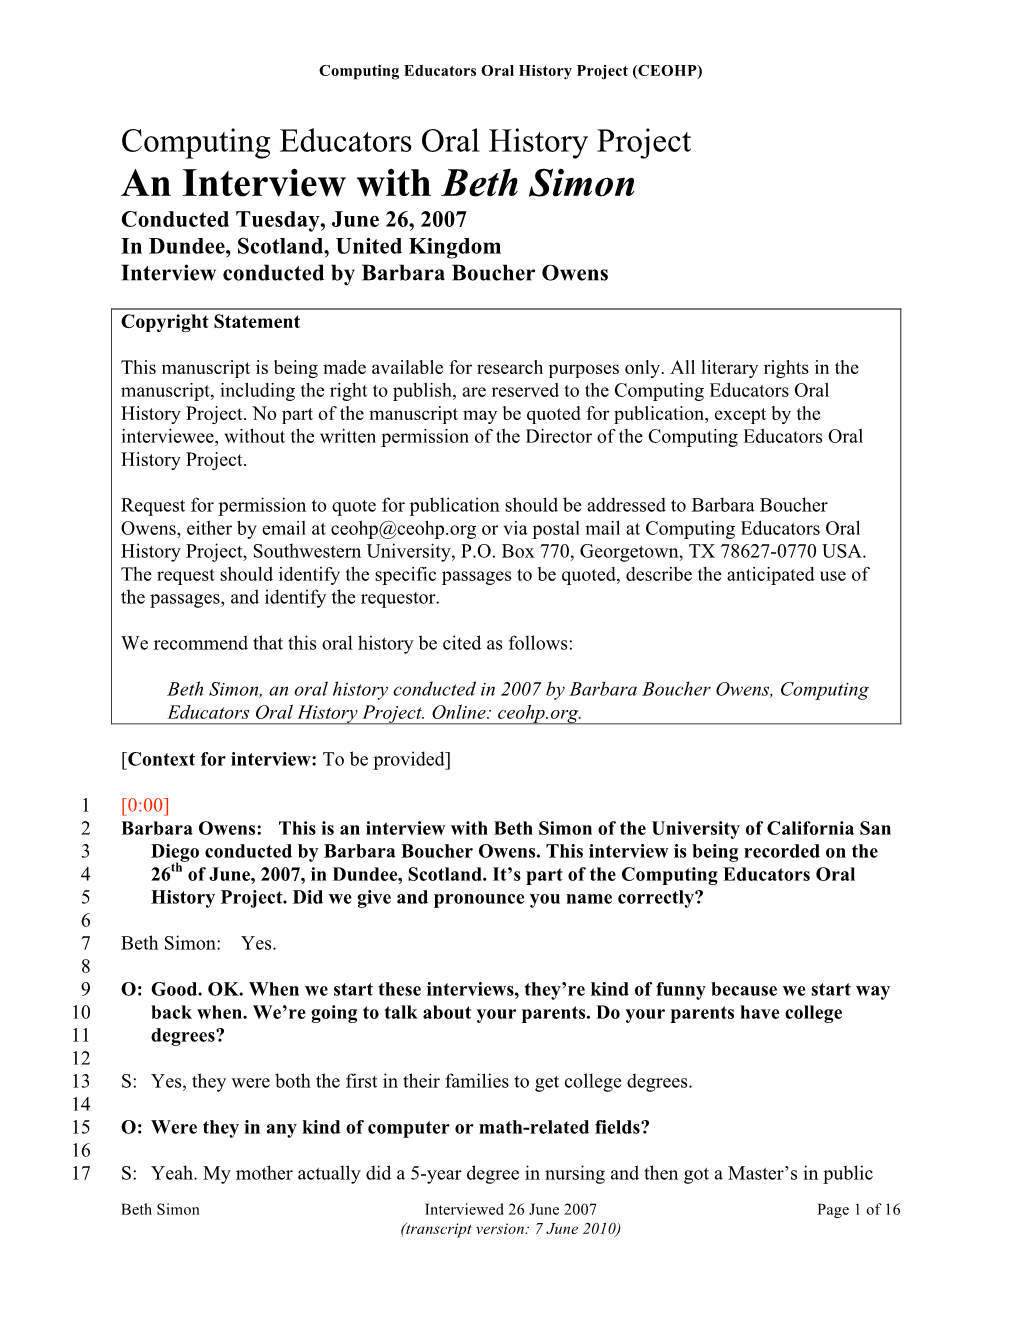 PDF Interview Transcript